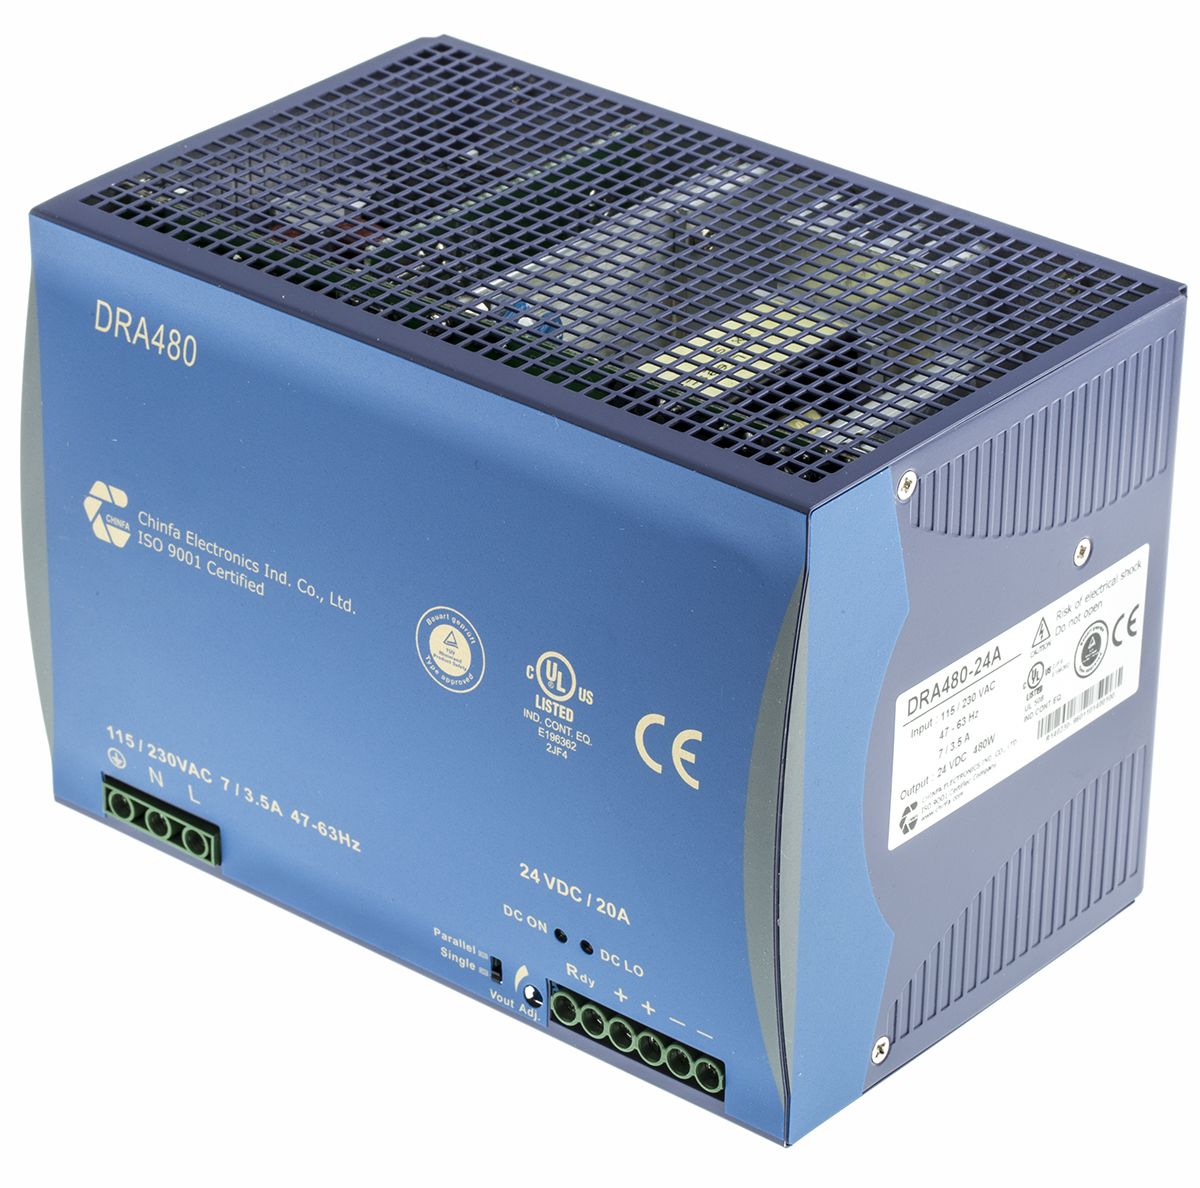 Chinfa DRA480 DIN Rail Power Supply 90 → 264V ac Input, 24V dc Output, 20A 480W